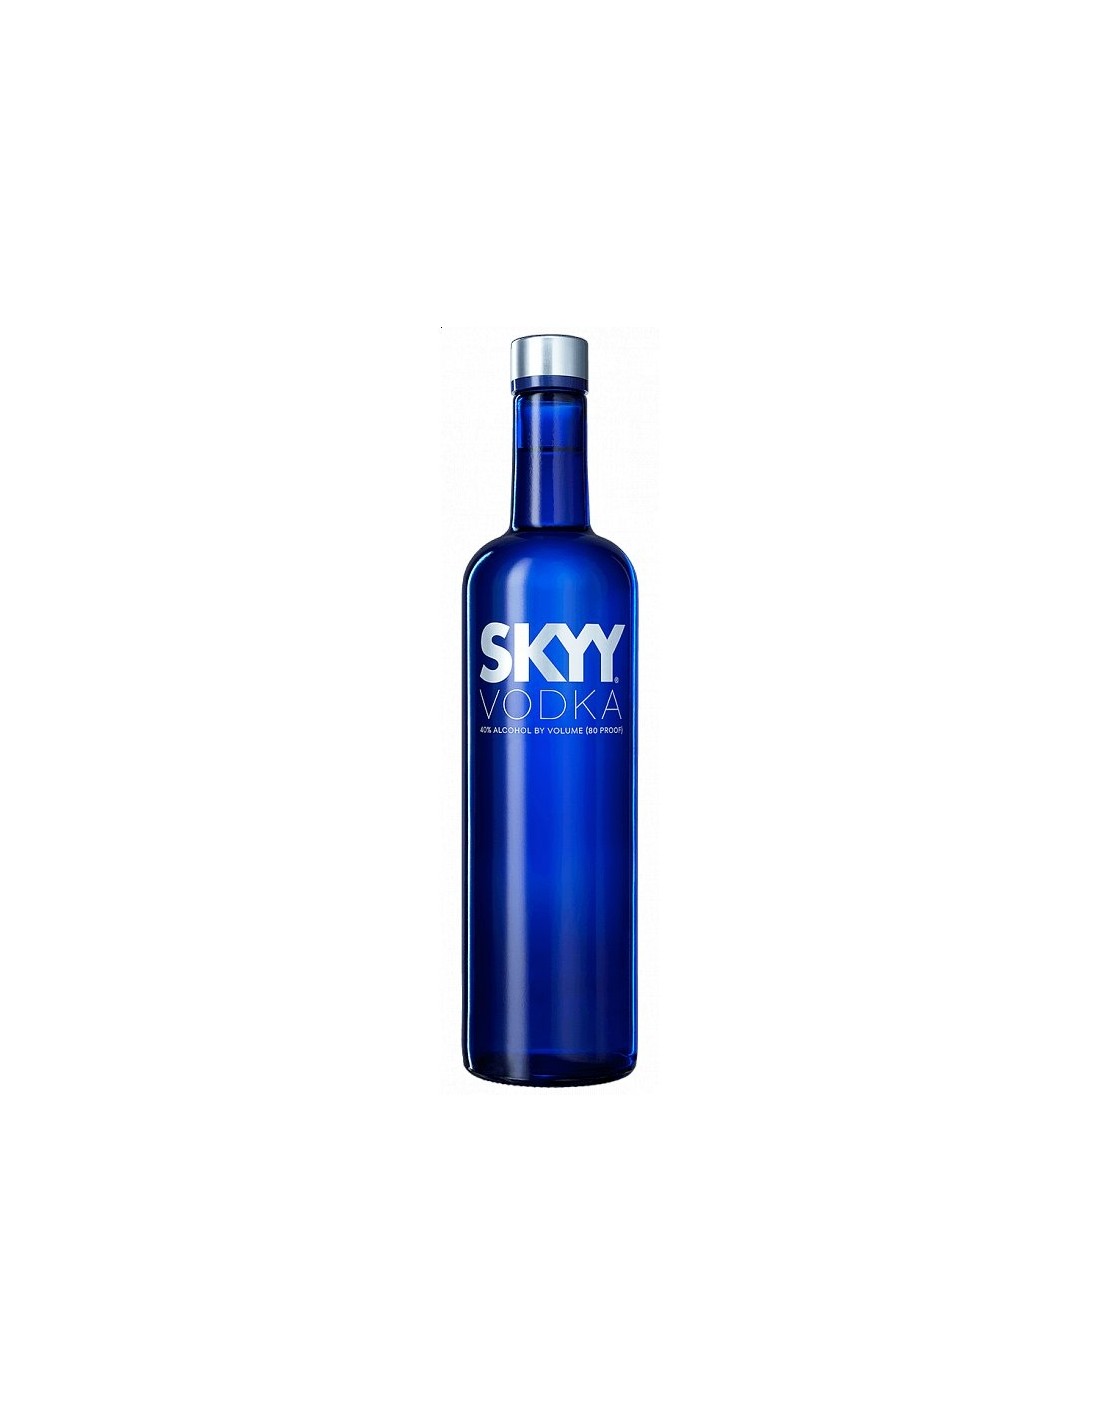 Vodca Skyy, 3L, 40% alc., SUA alcooldiscount.ro